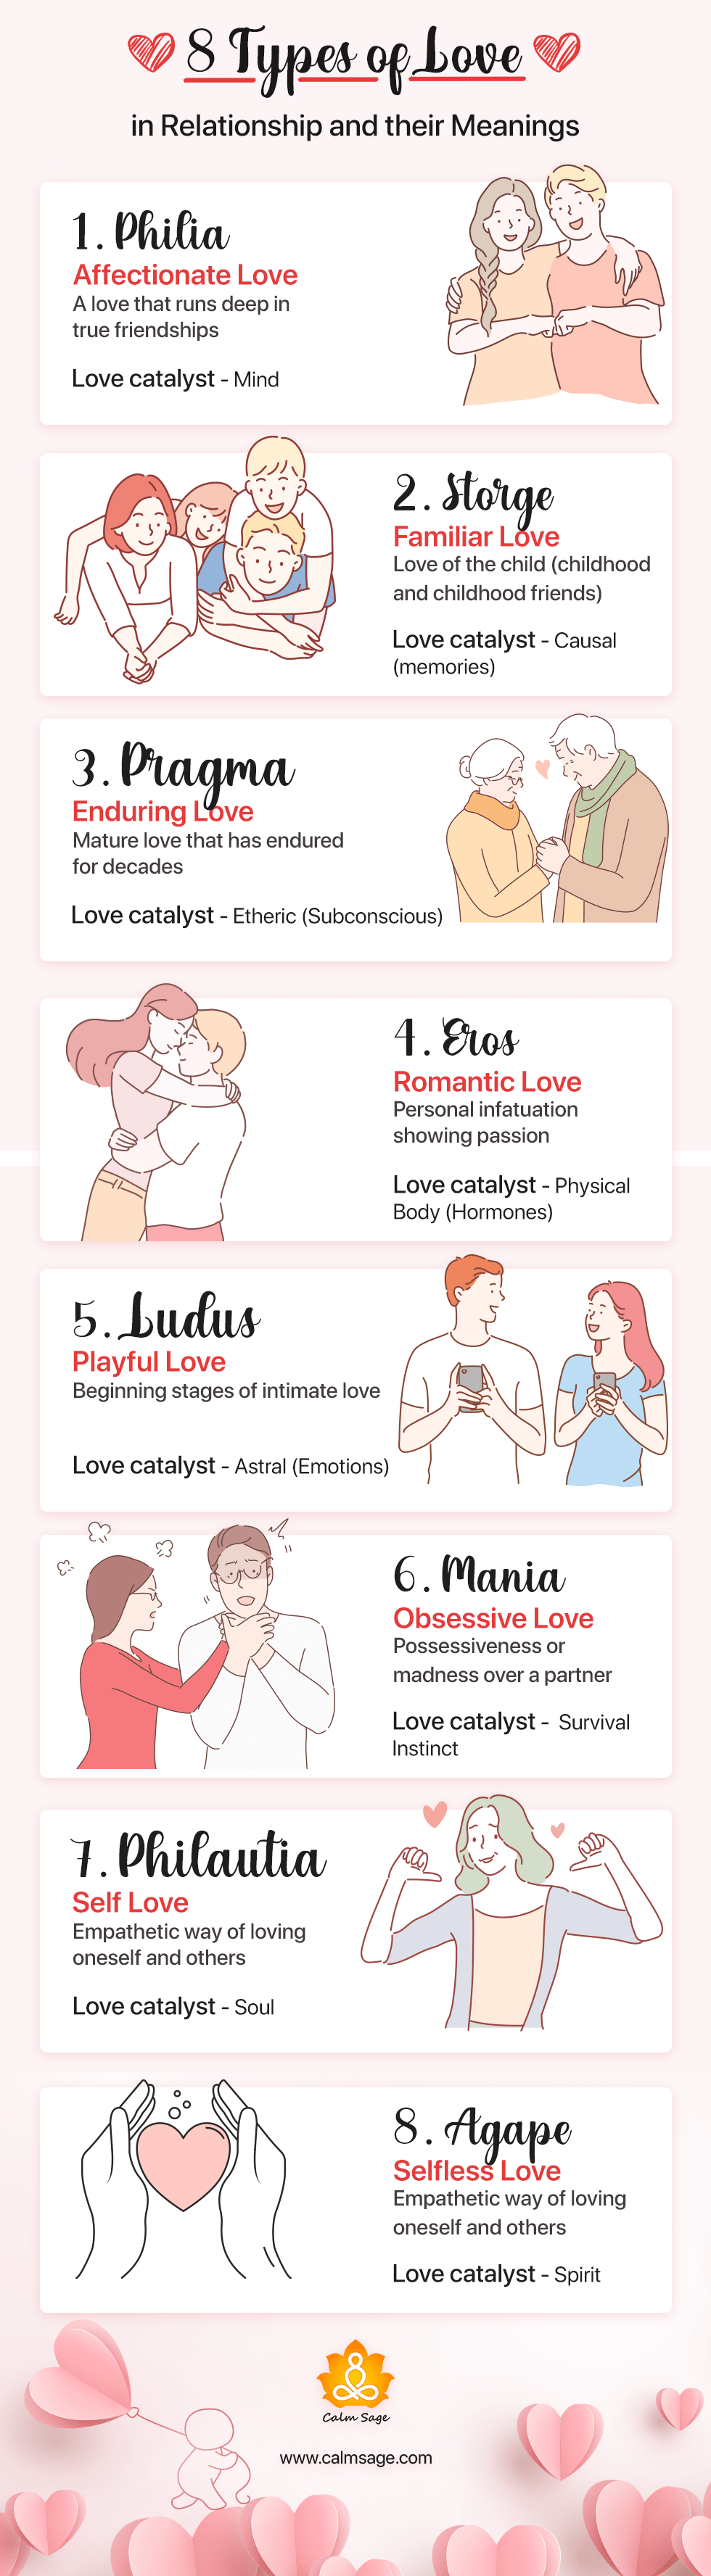 8 tipos de amor